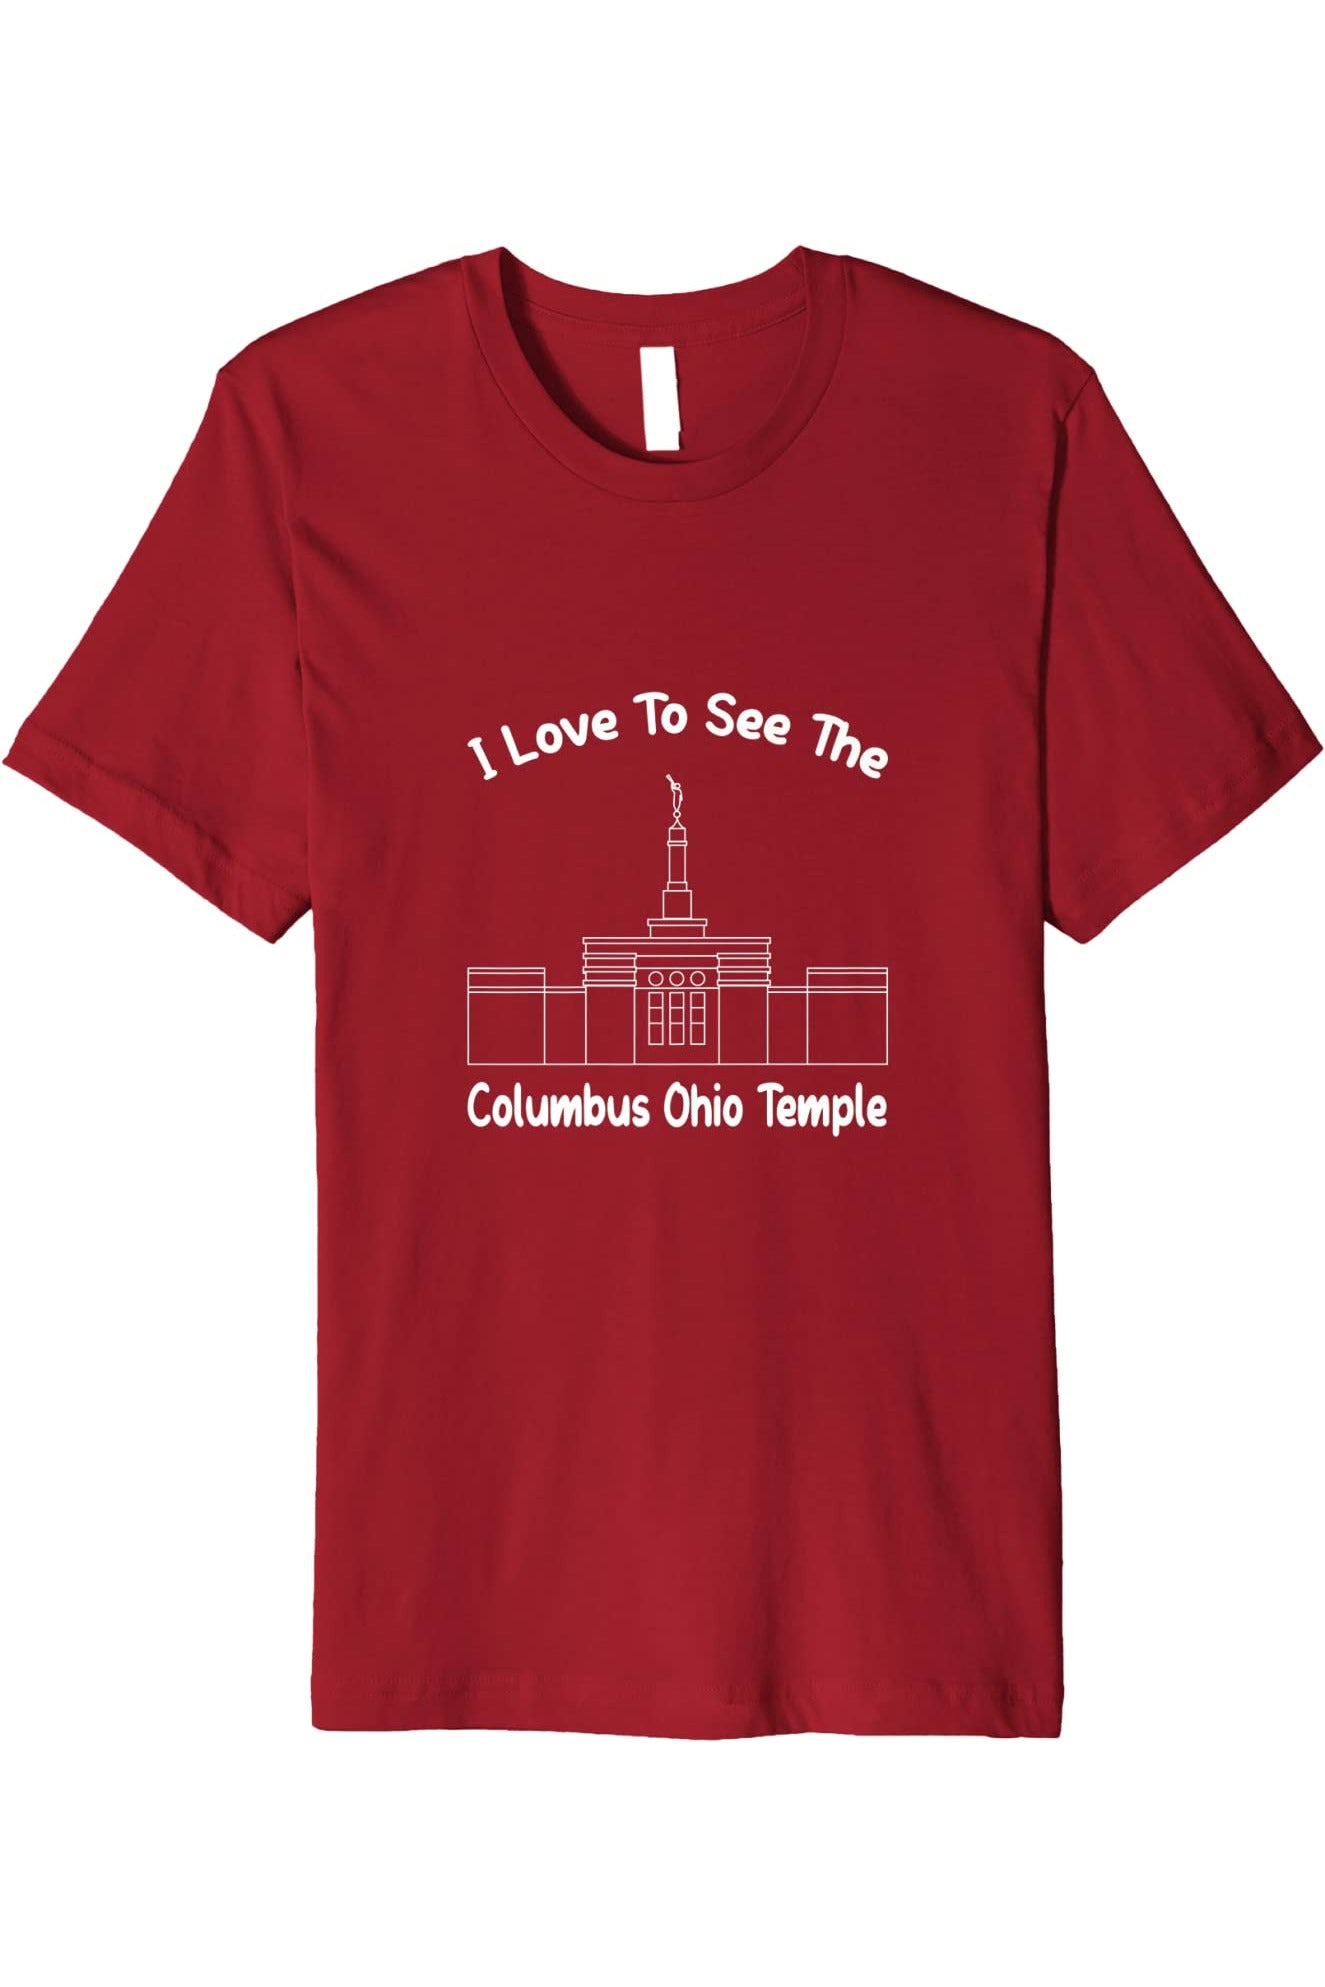 Columbus Ohio Temple T-Shirt - Premium - Primary Style (English) US